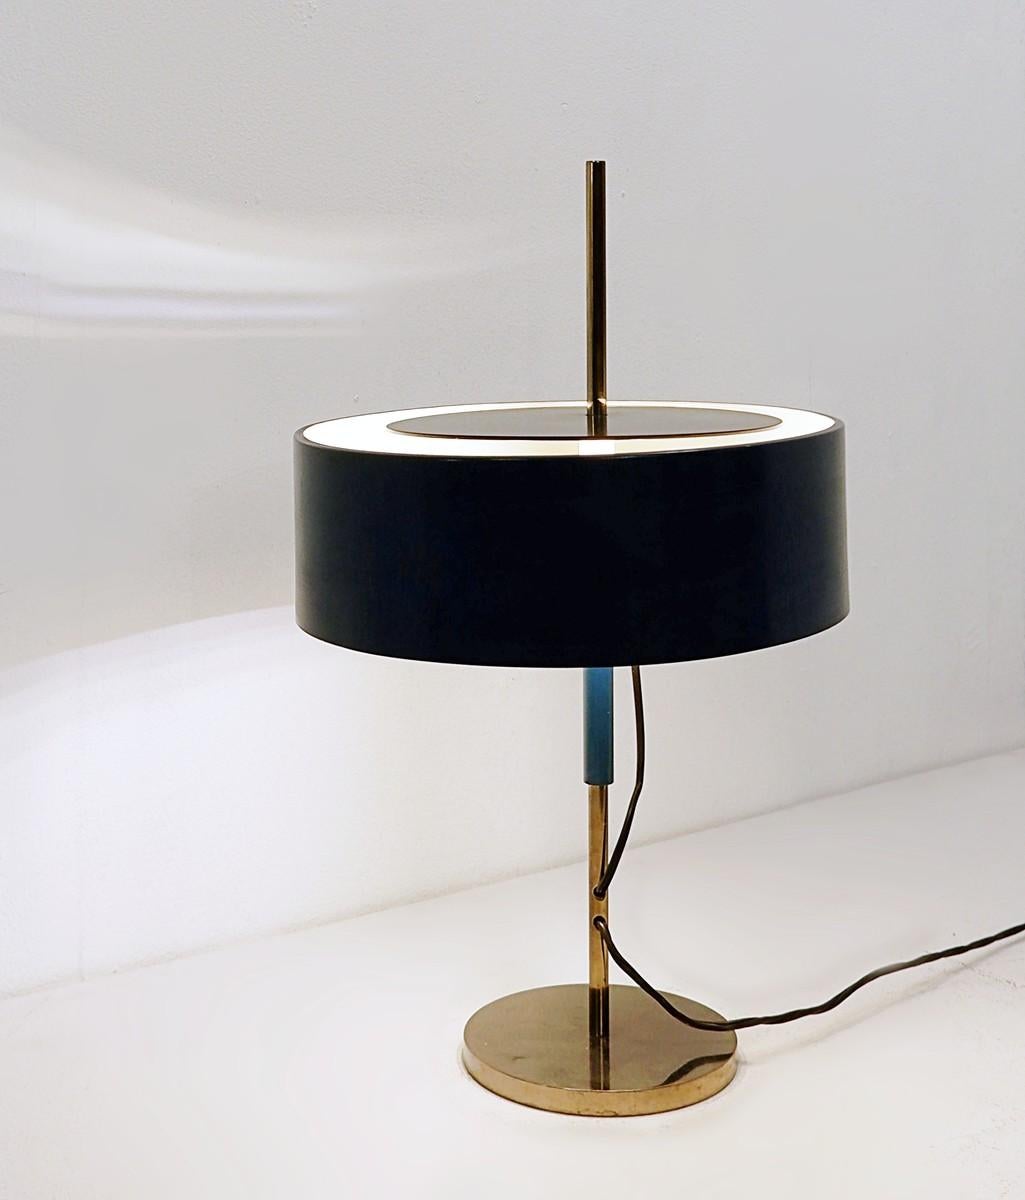 Mod.243 desk lamp by Angelo Ostuni & Roberto Forti for Oluce, 1950s.